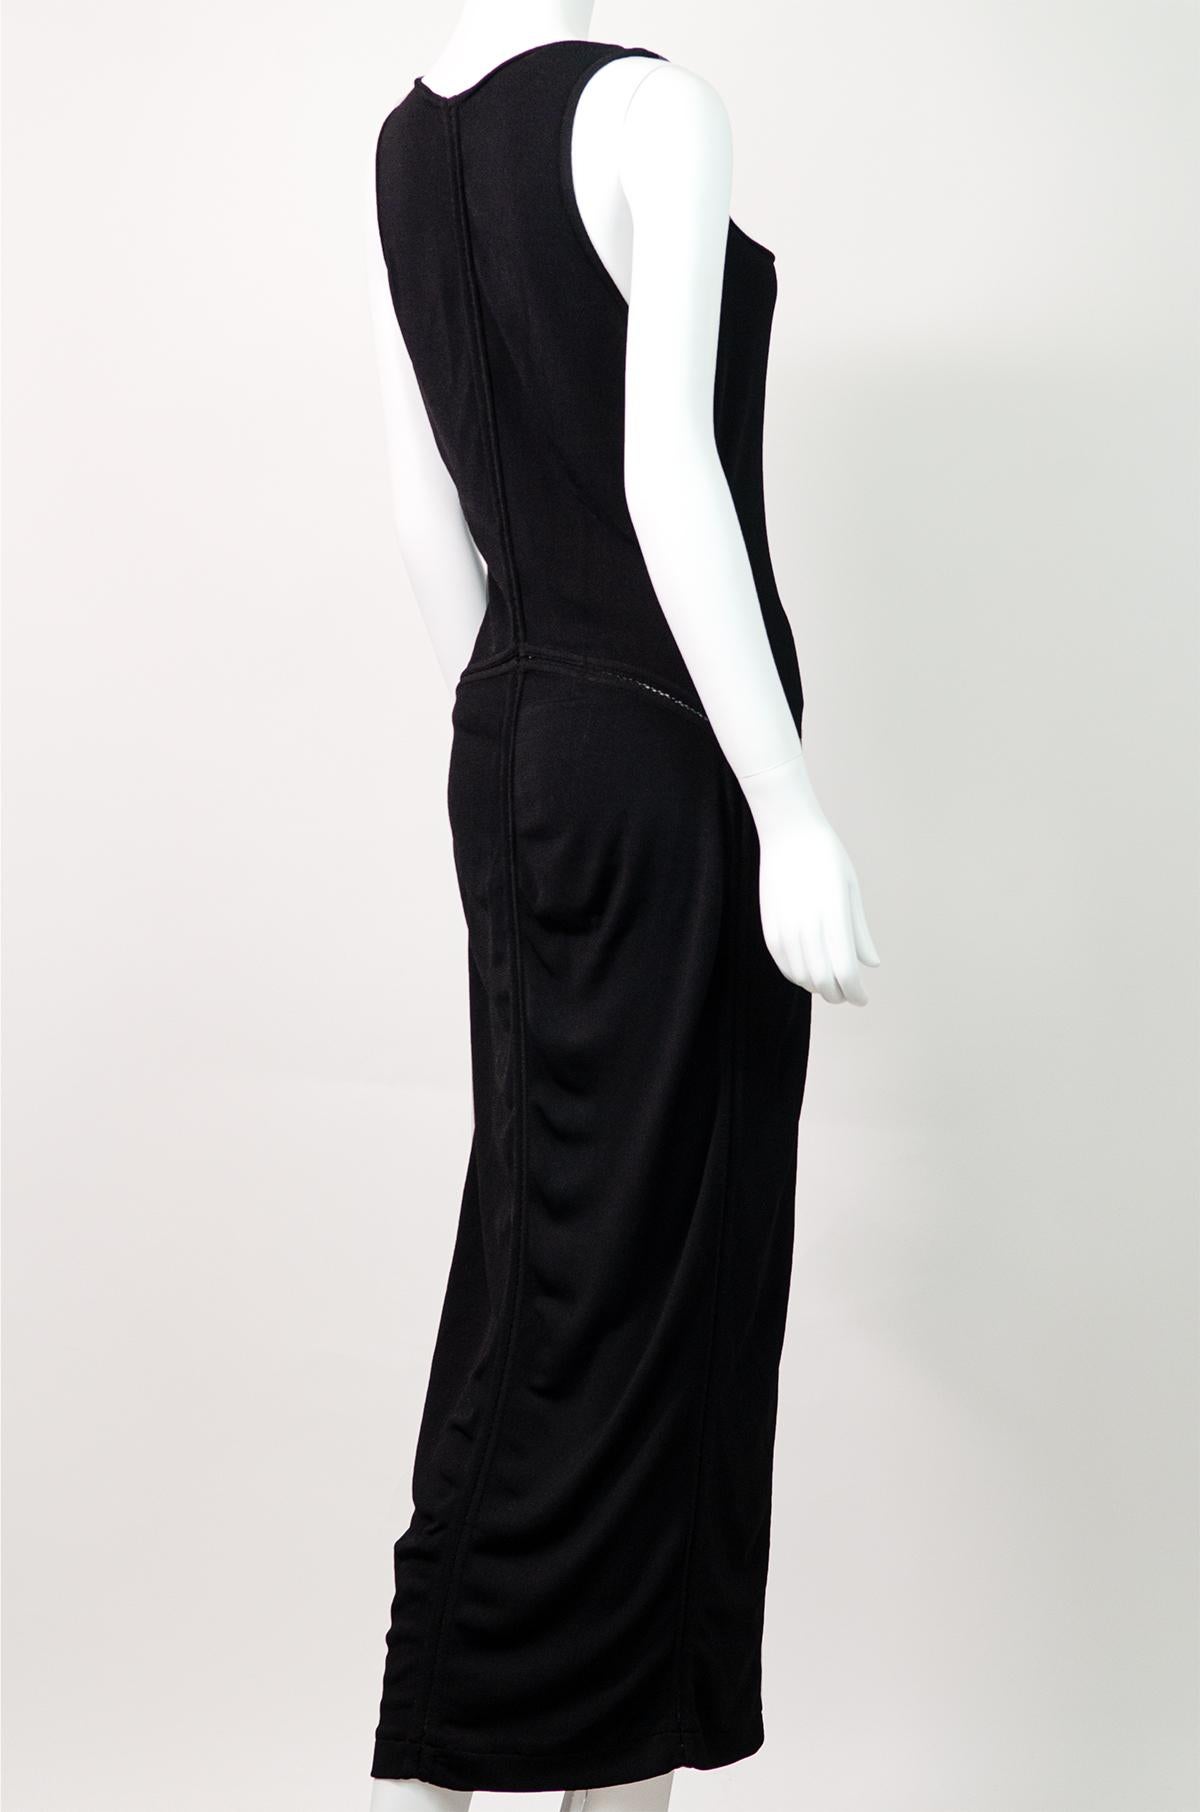 AZZEDINE ALAÏA S/S 1988 Runway Knit Maxi Dress M For Sale 1